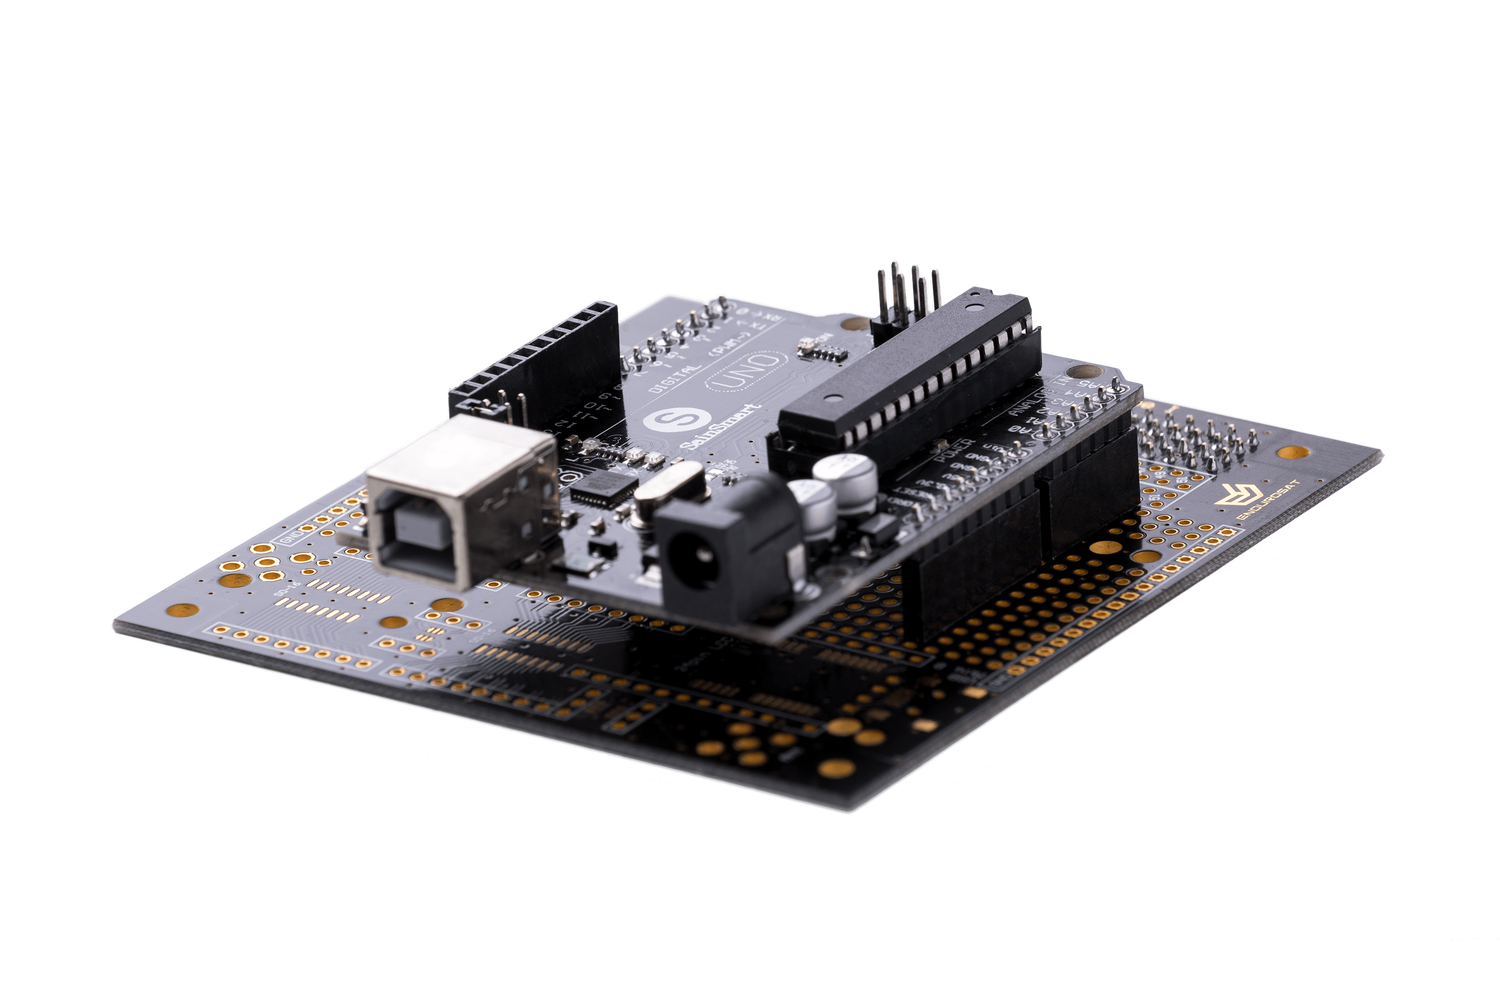 Endurosat Protoboard with Microcontroler